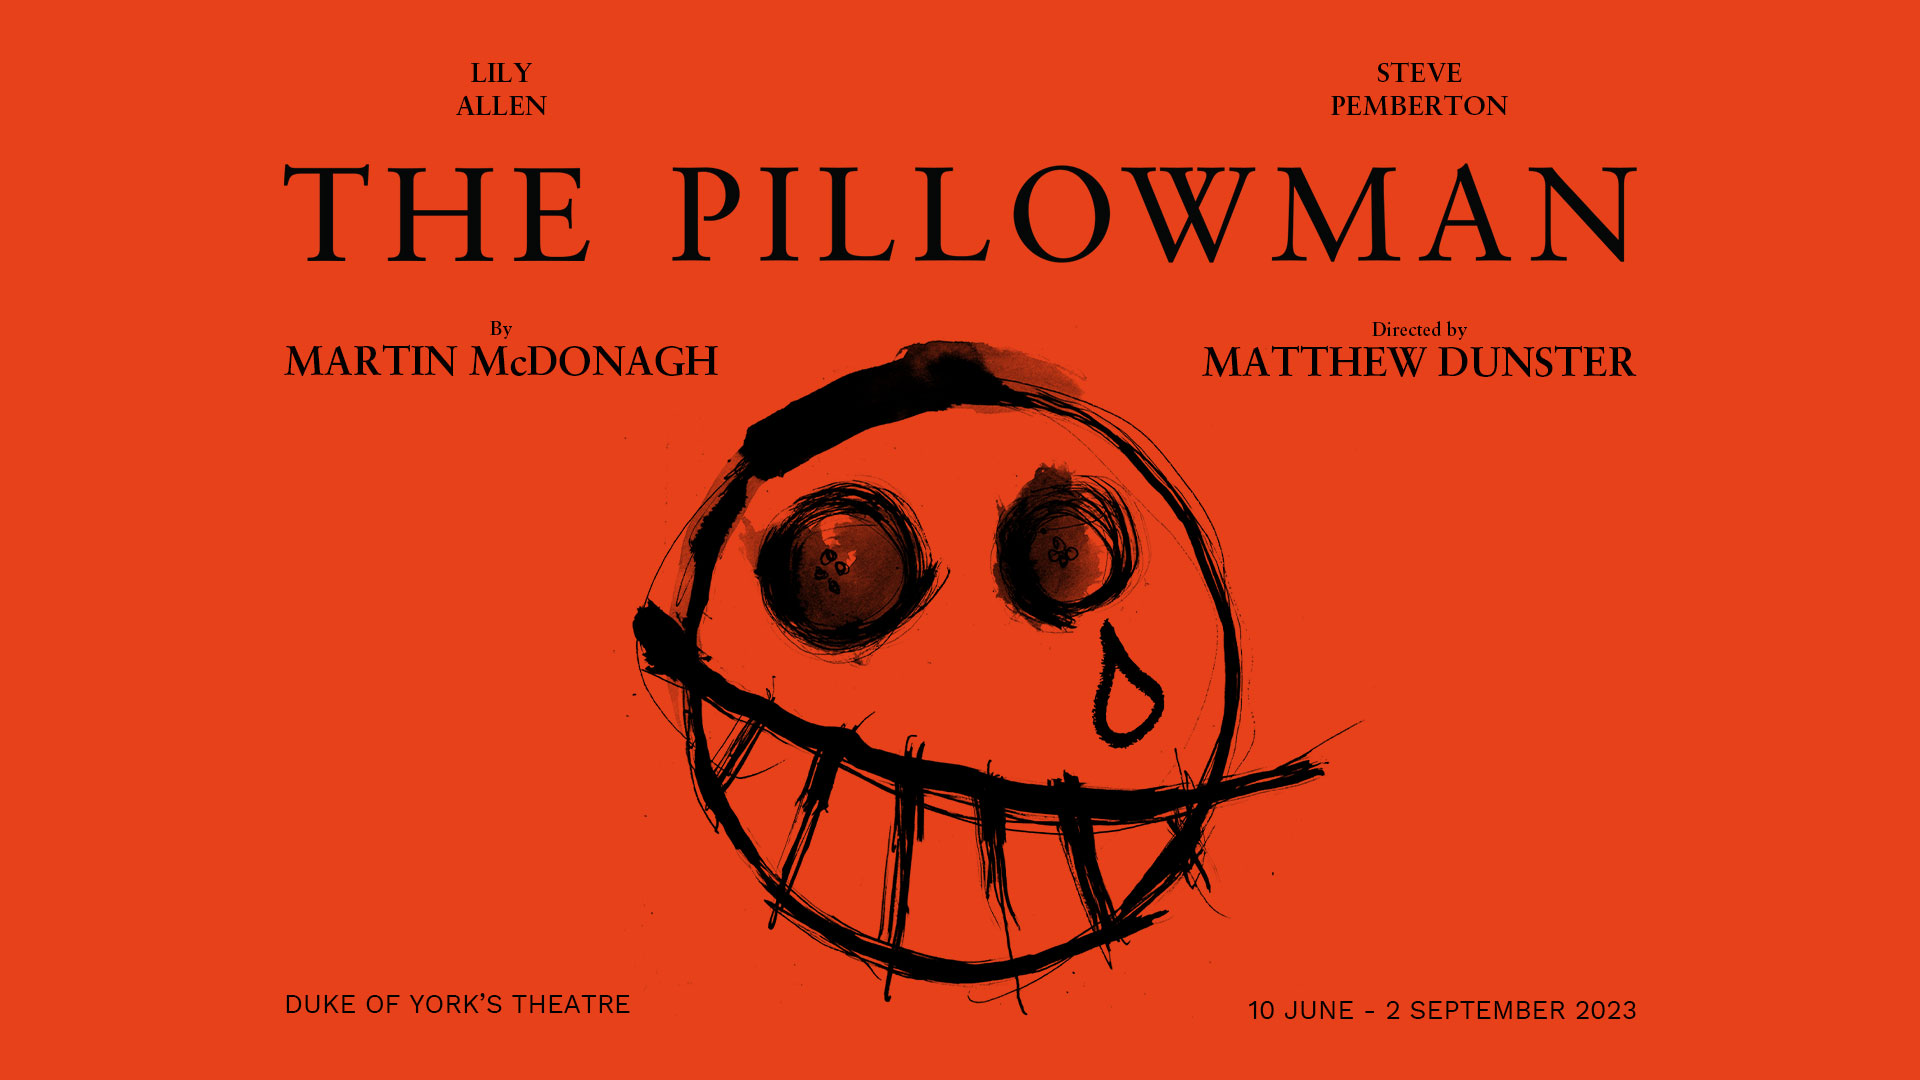 LILY ALLEN & STEVE PEMBERTON THE PILLOWMAN By MARTIN McDONAGH Directed by MATTHEW DUNSTER DUKE OF YORK’S THEATRE 10 JUNE - 2 SEPTEMBER 2023